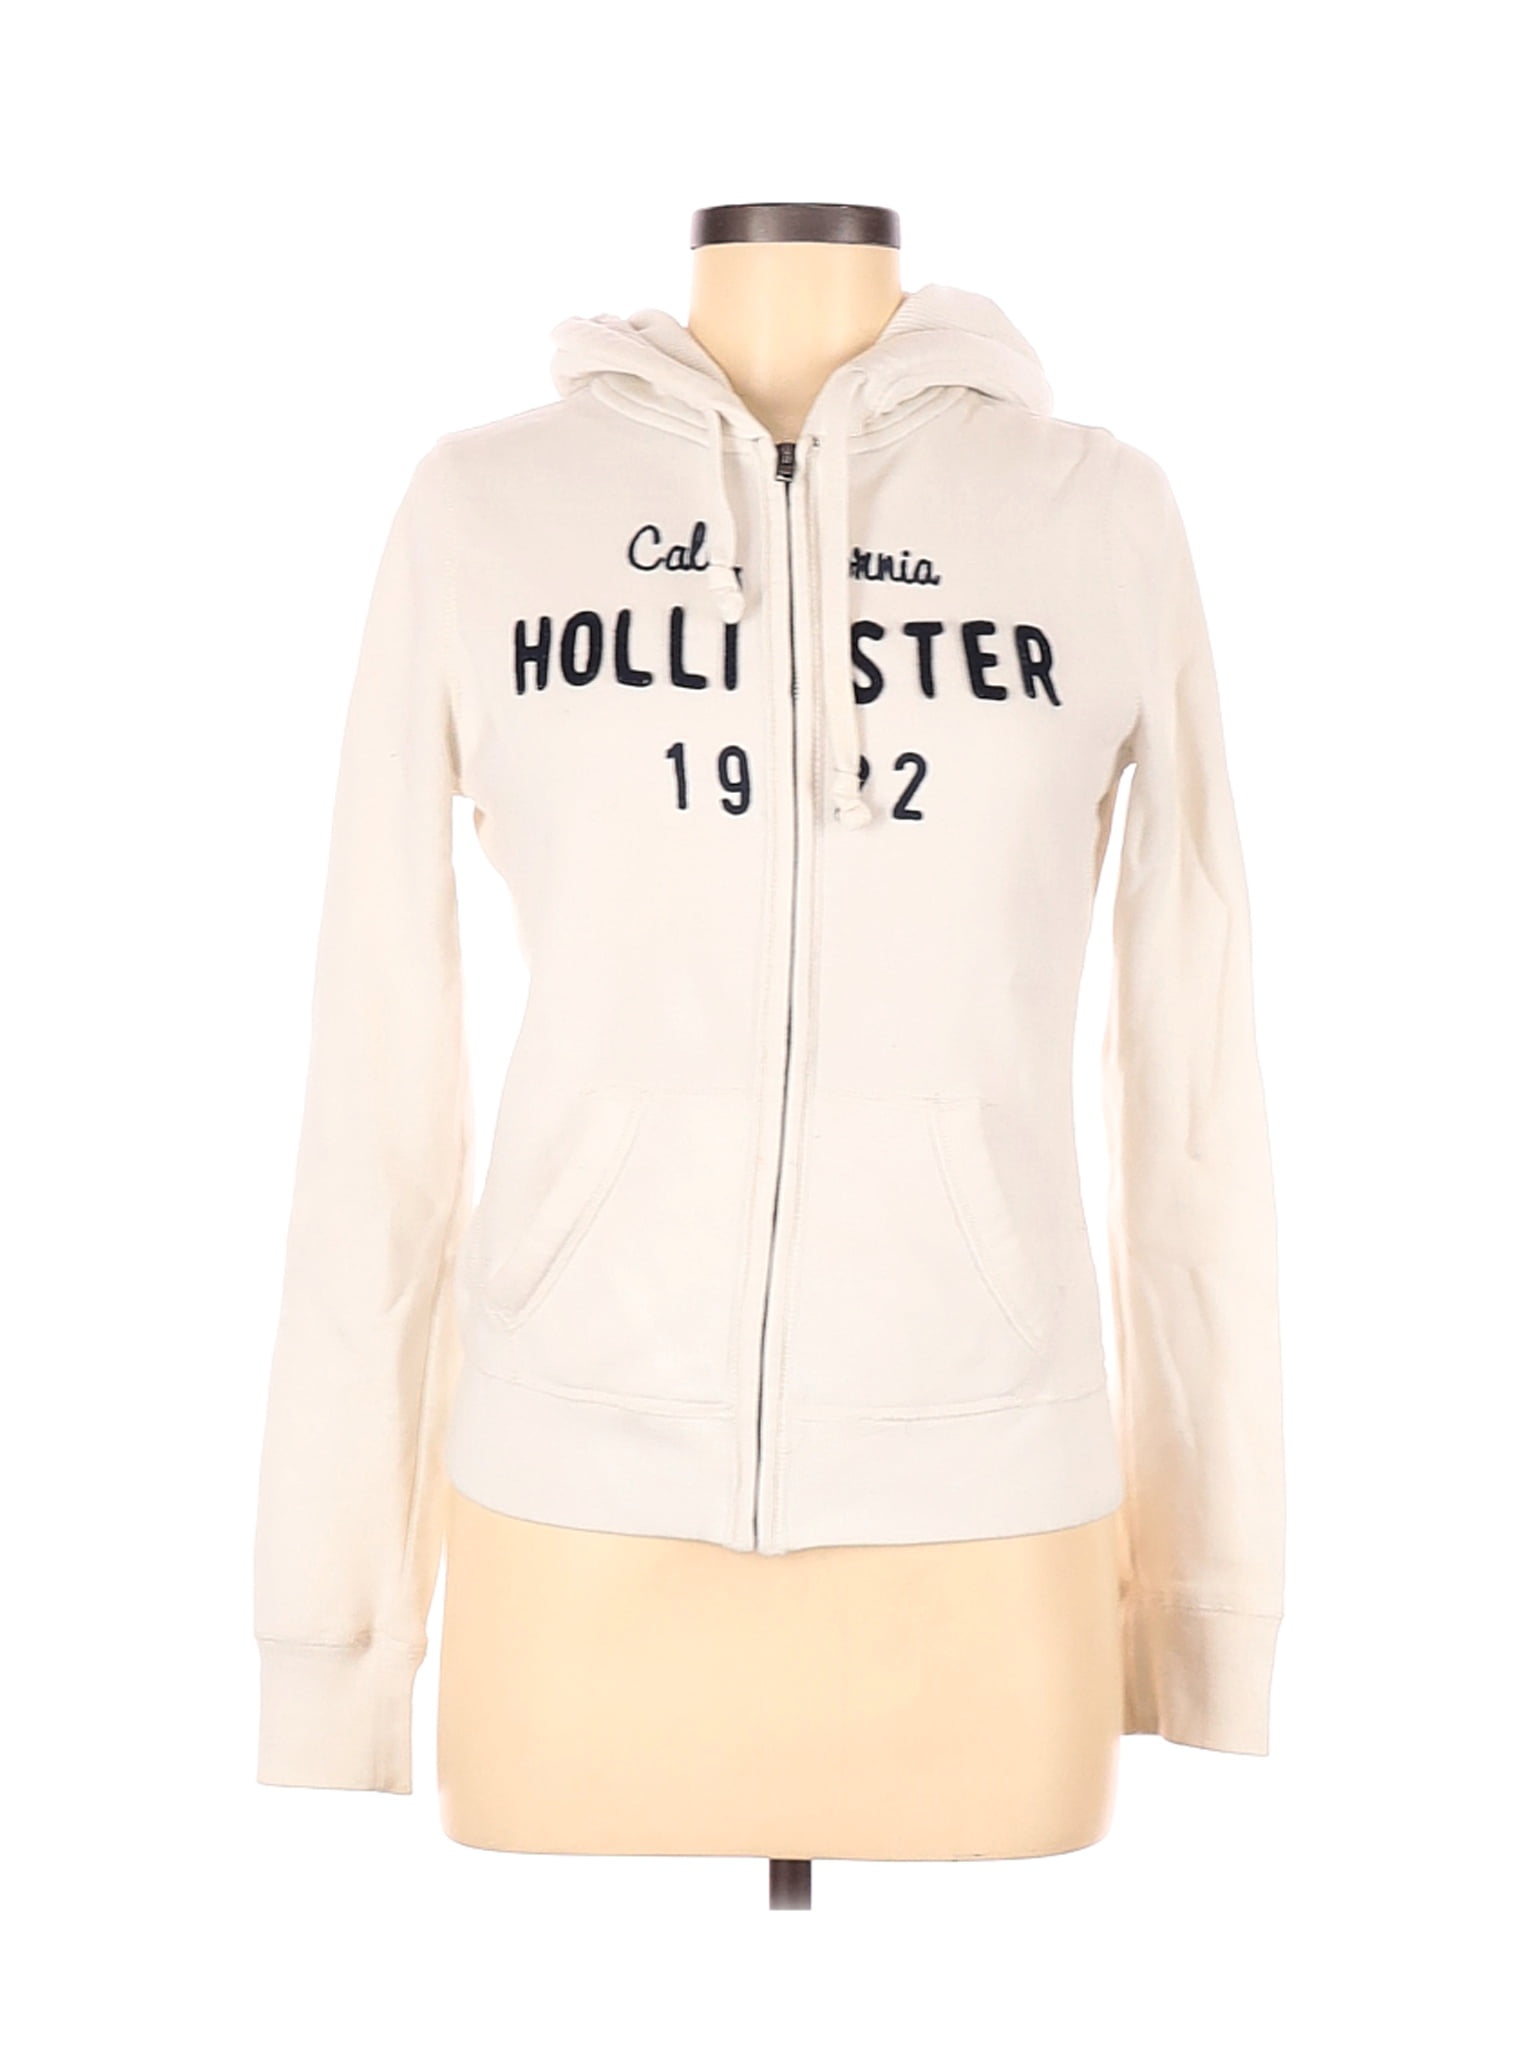 hollister white zip up hoodie